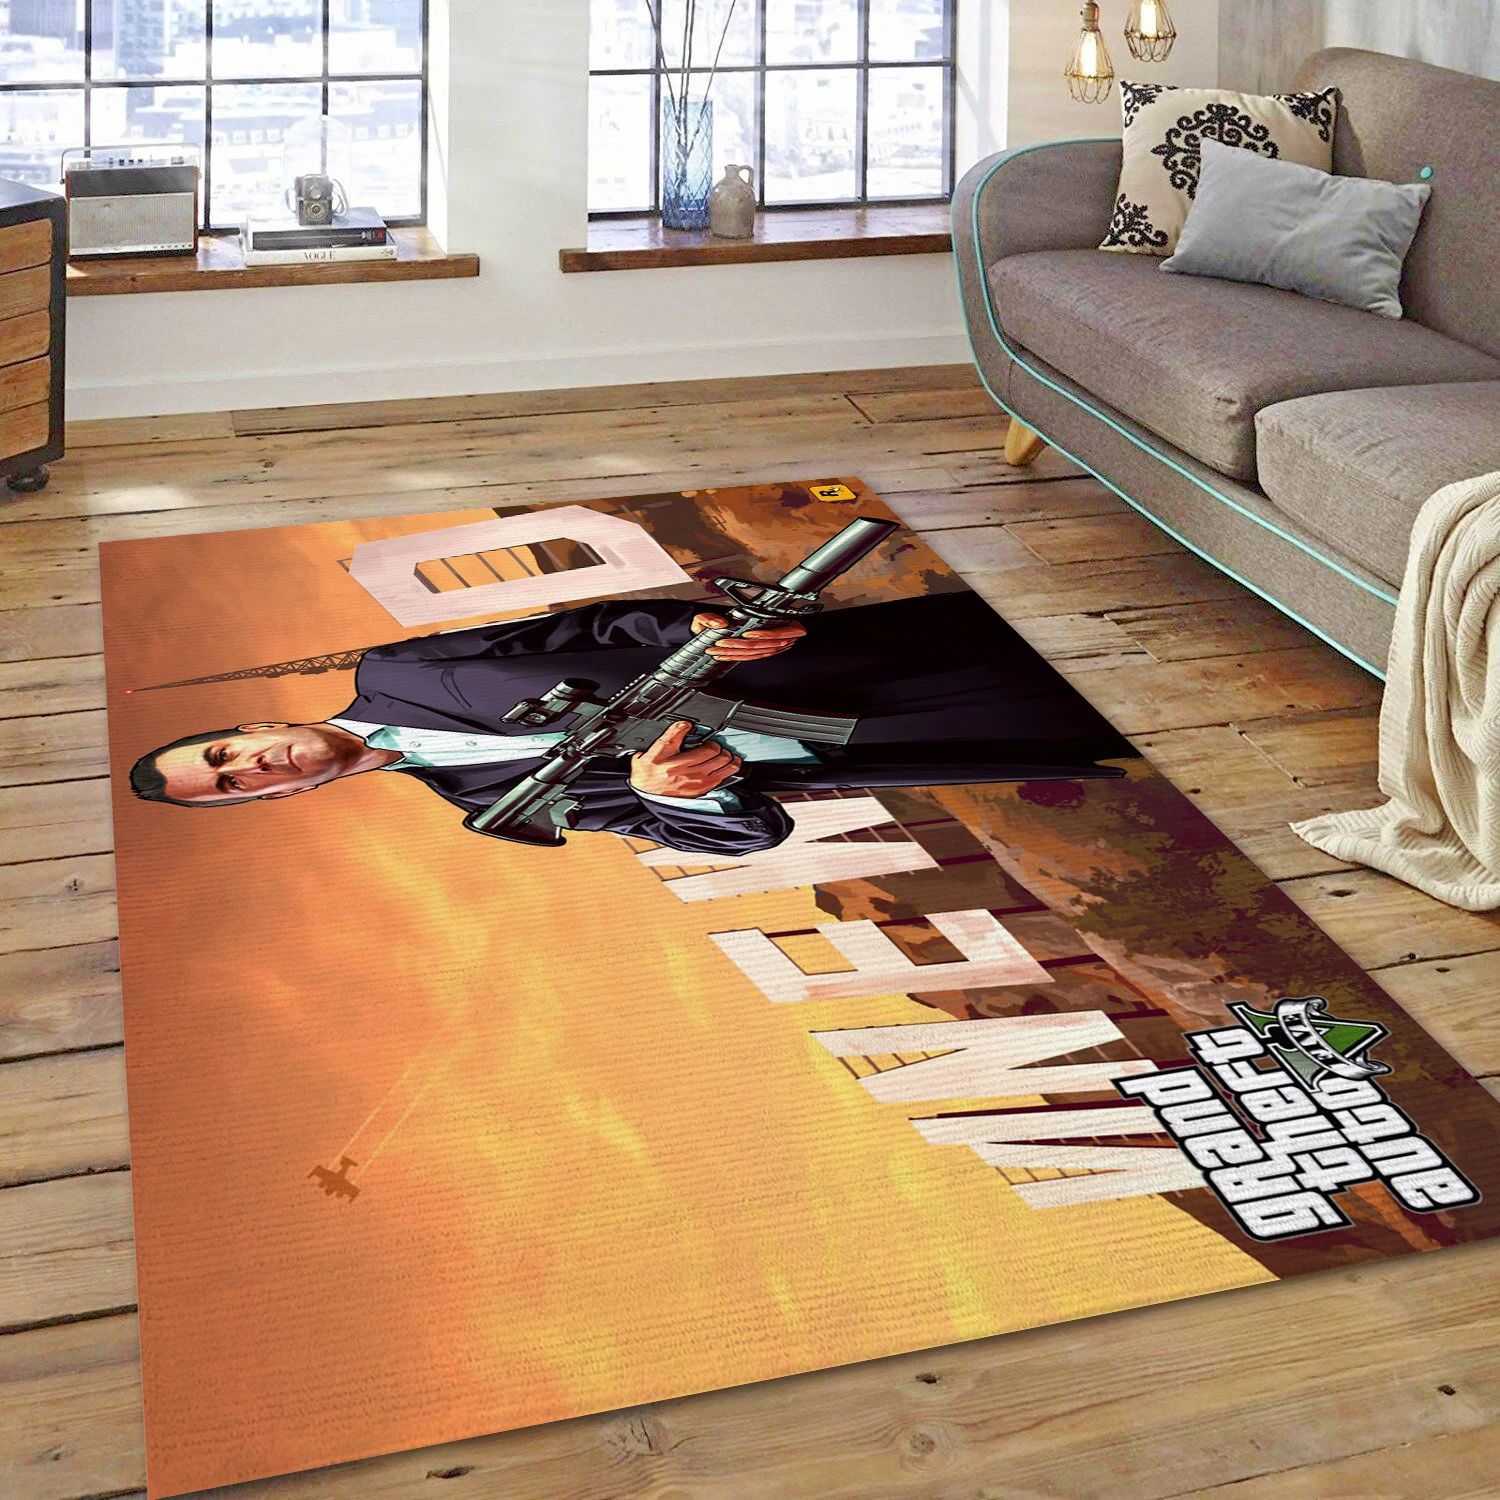 Grand Theft Auto V Game Area Rug Carpet, Living Room Rug - Home Decor Floor Decor - Indoor Outdoor Rugs